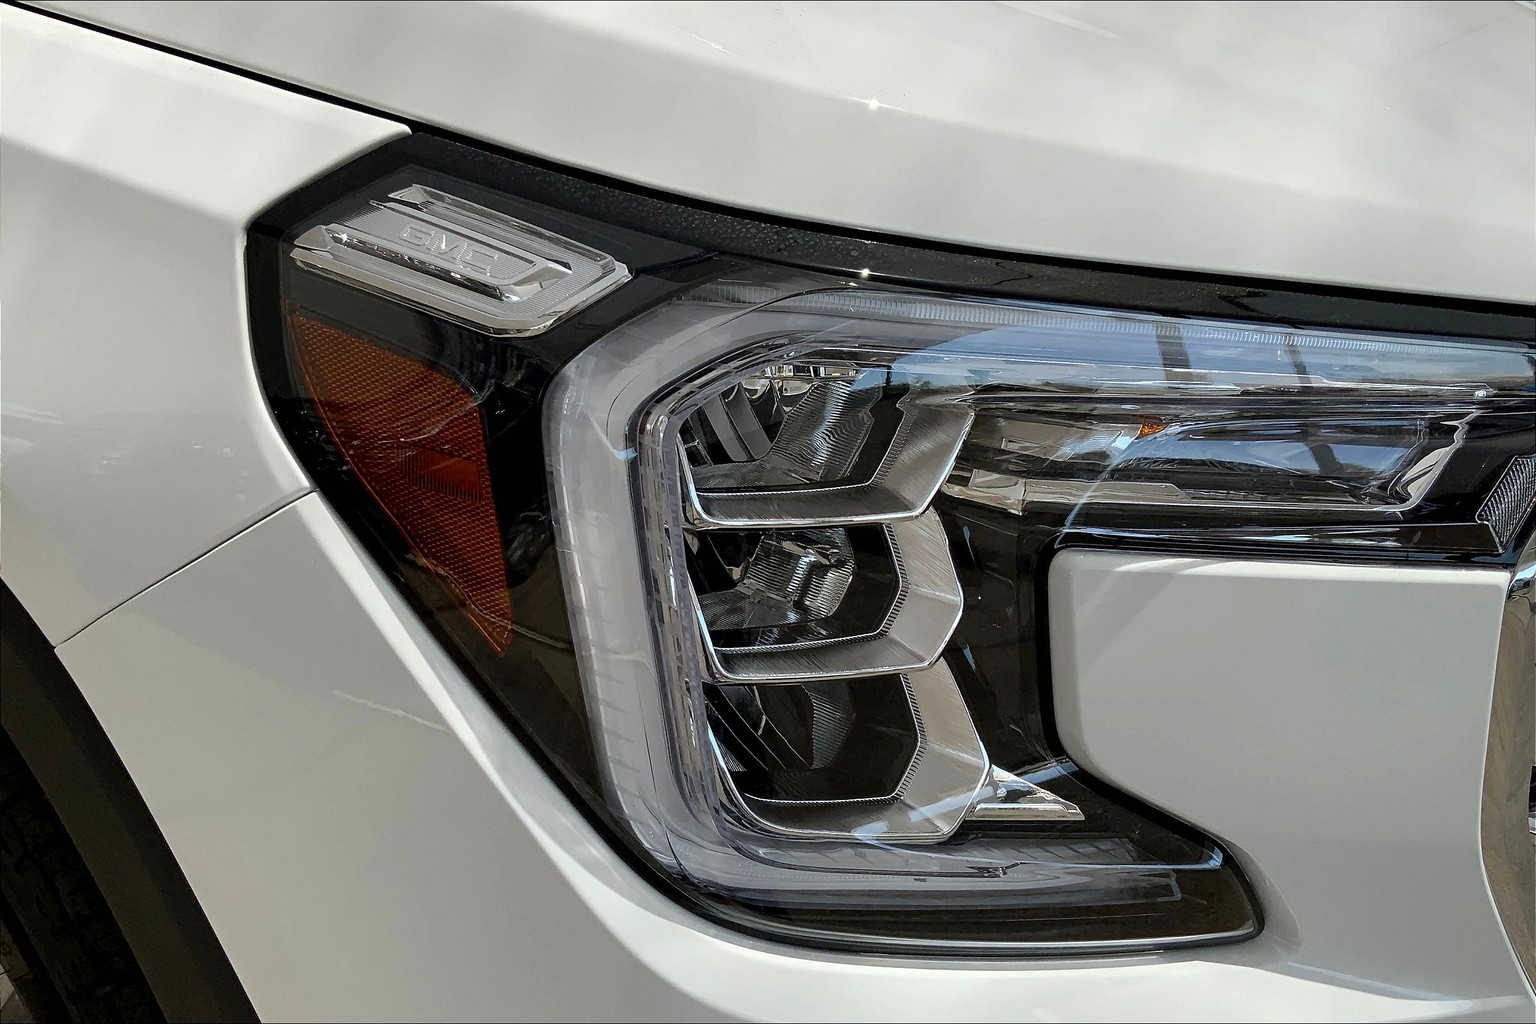 Reduced headlight glare lifts 2022 Mitsubishi Outlander to highest award